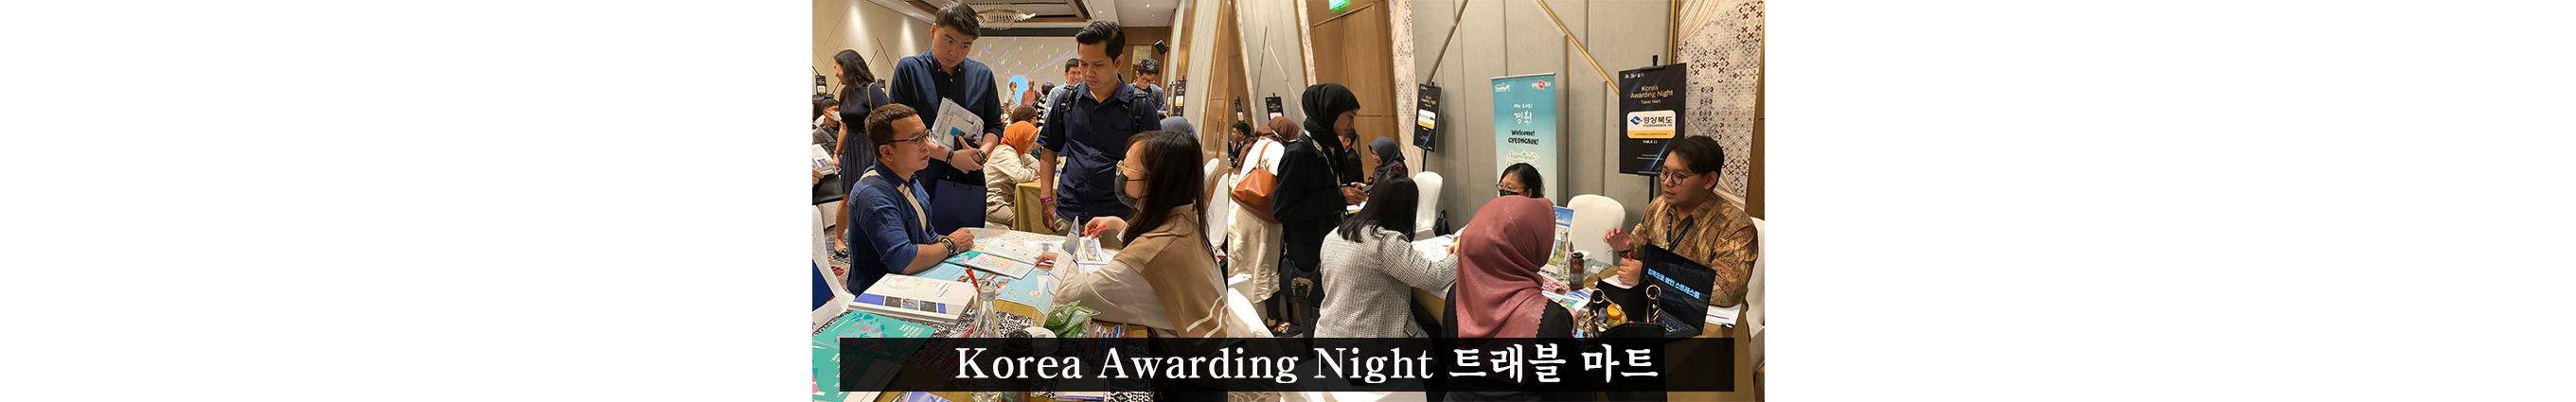 Korea Awarding Night 트래블 마트